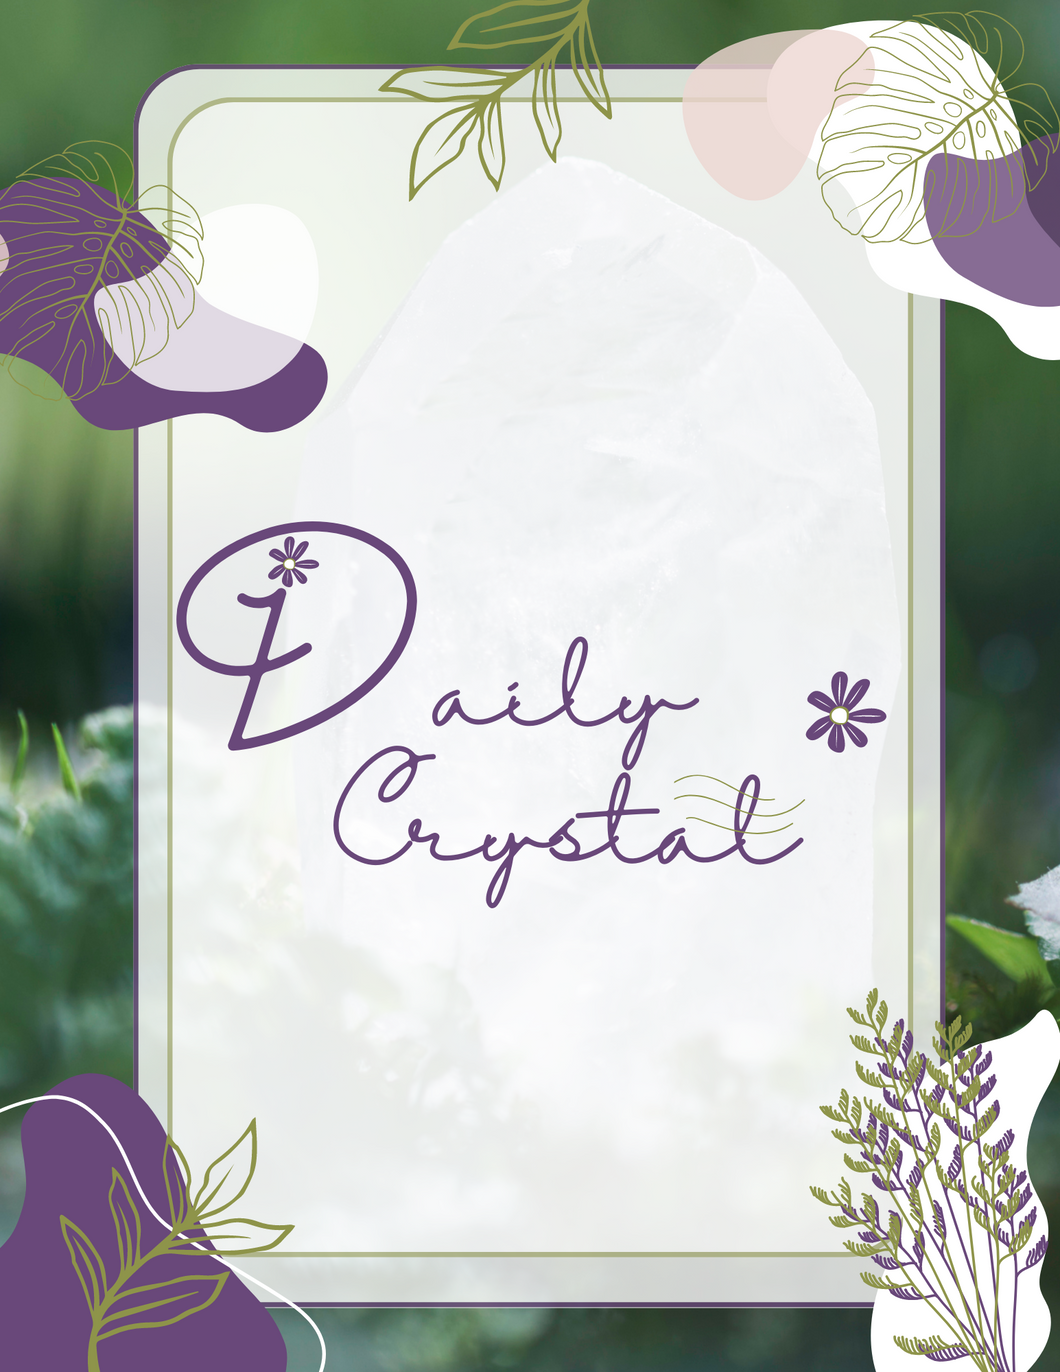 Digital Daily crystal handbook